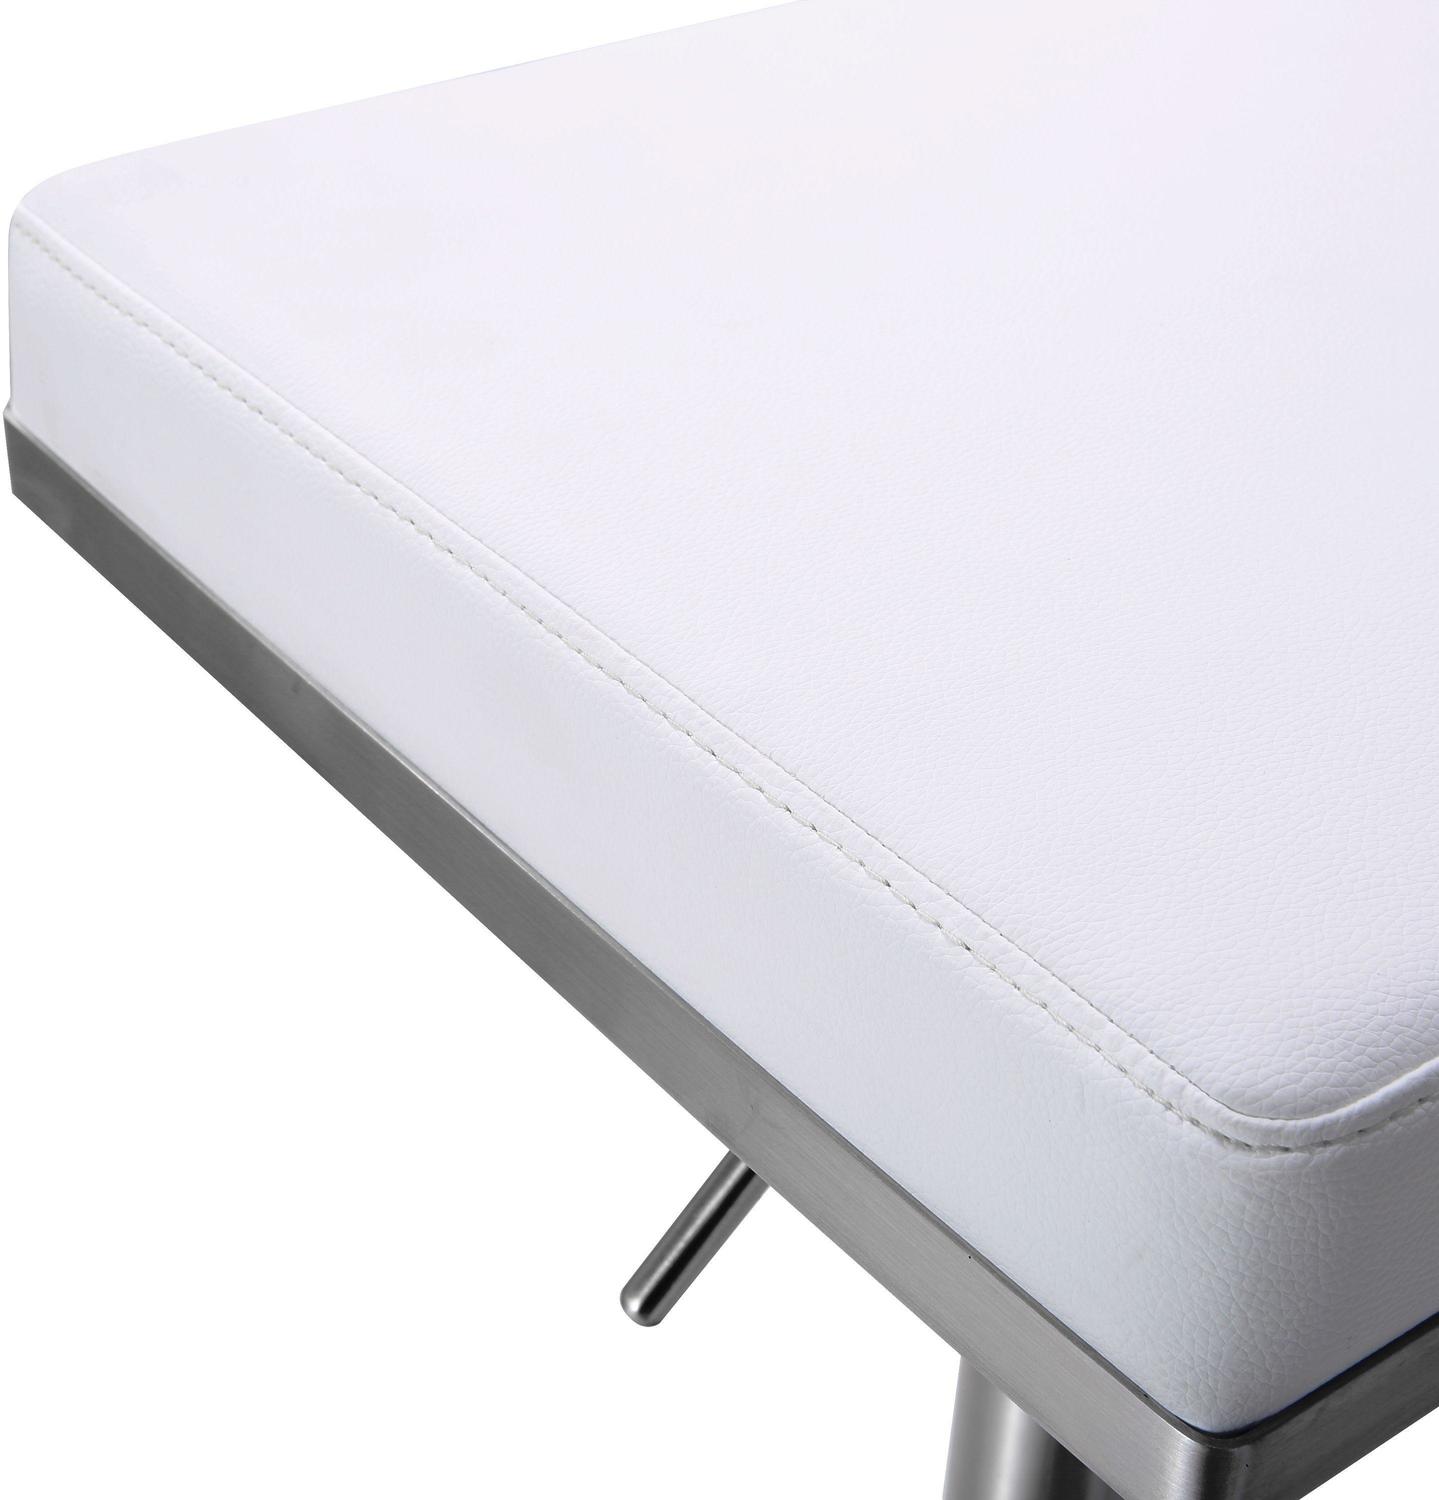 high back stools for kitchen island Tov Furniture Stools White